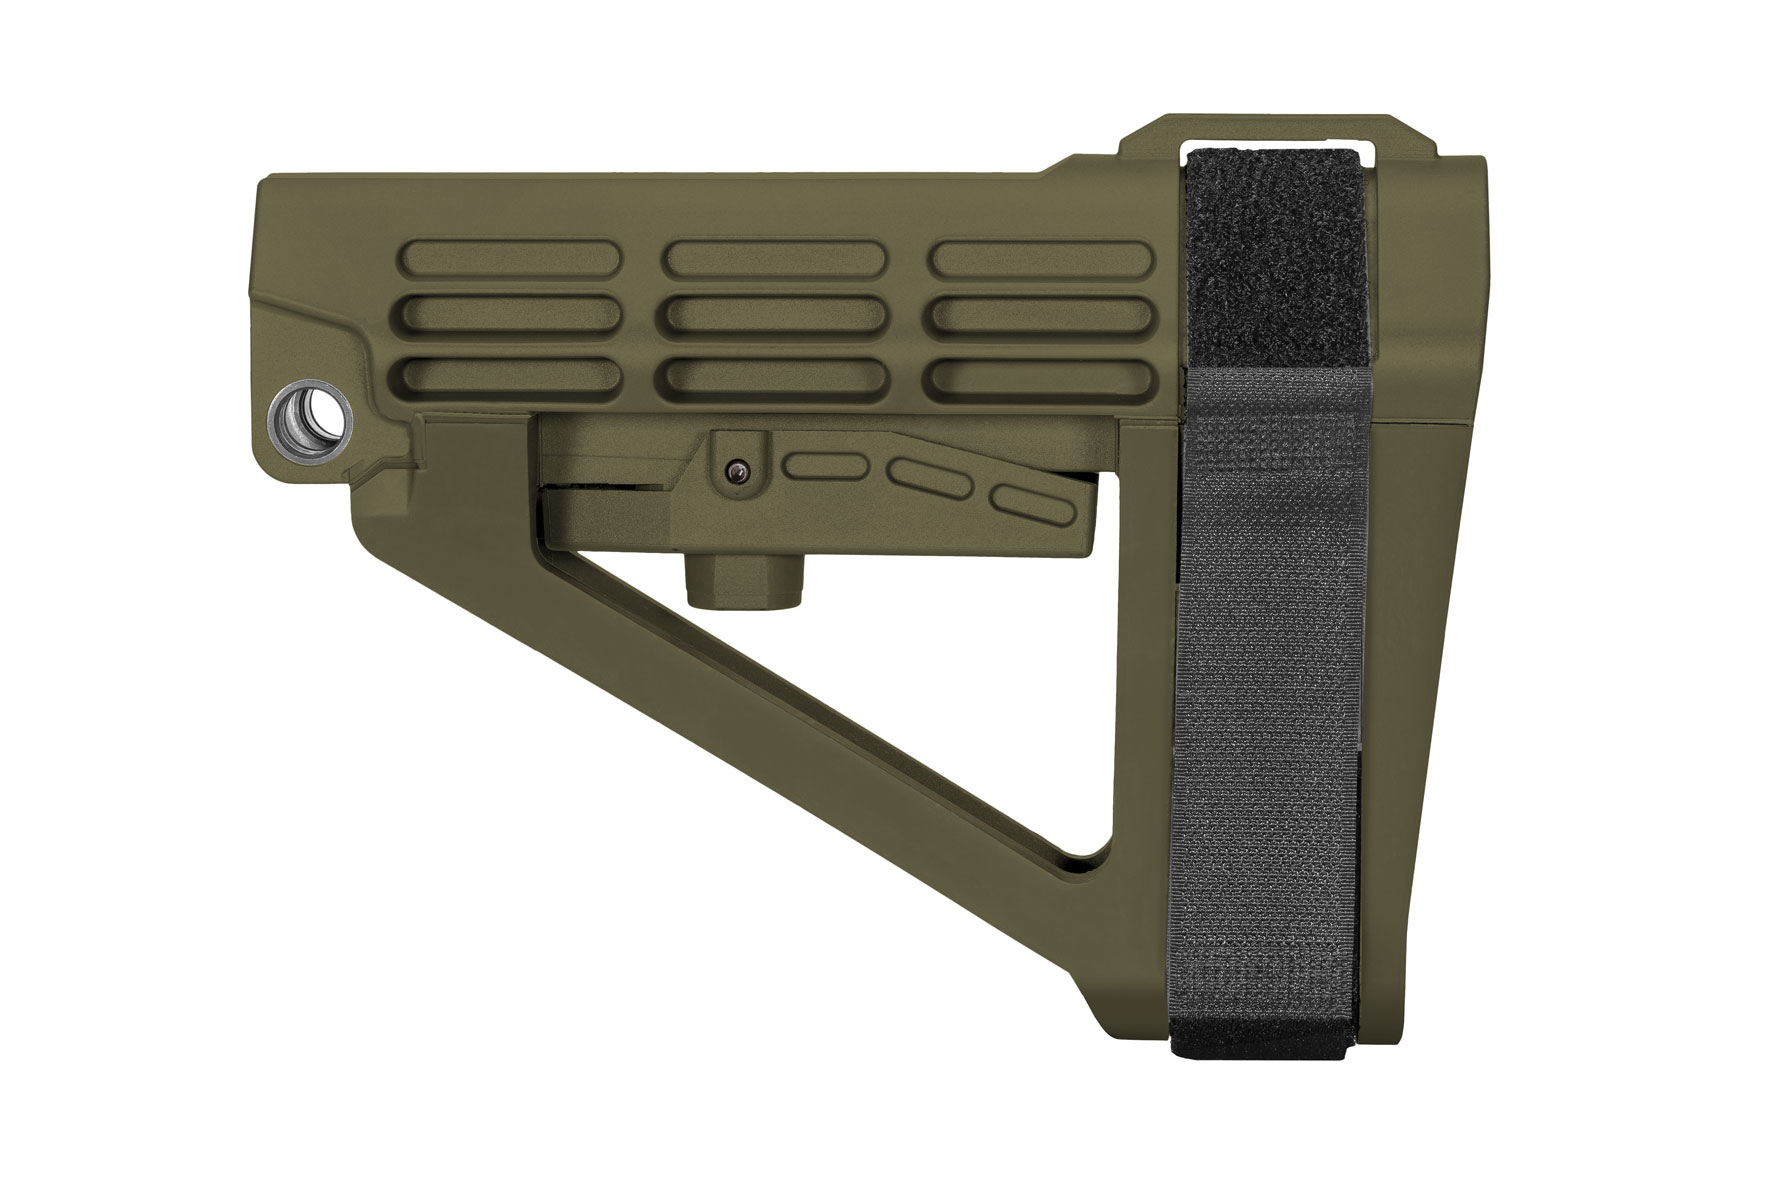 実物 SBPDW SB Tactical Pistol Brace ODG 新品